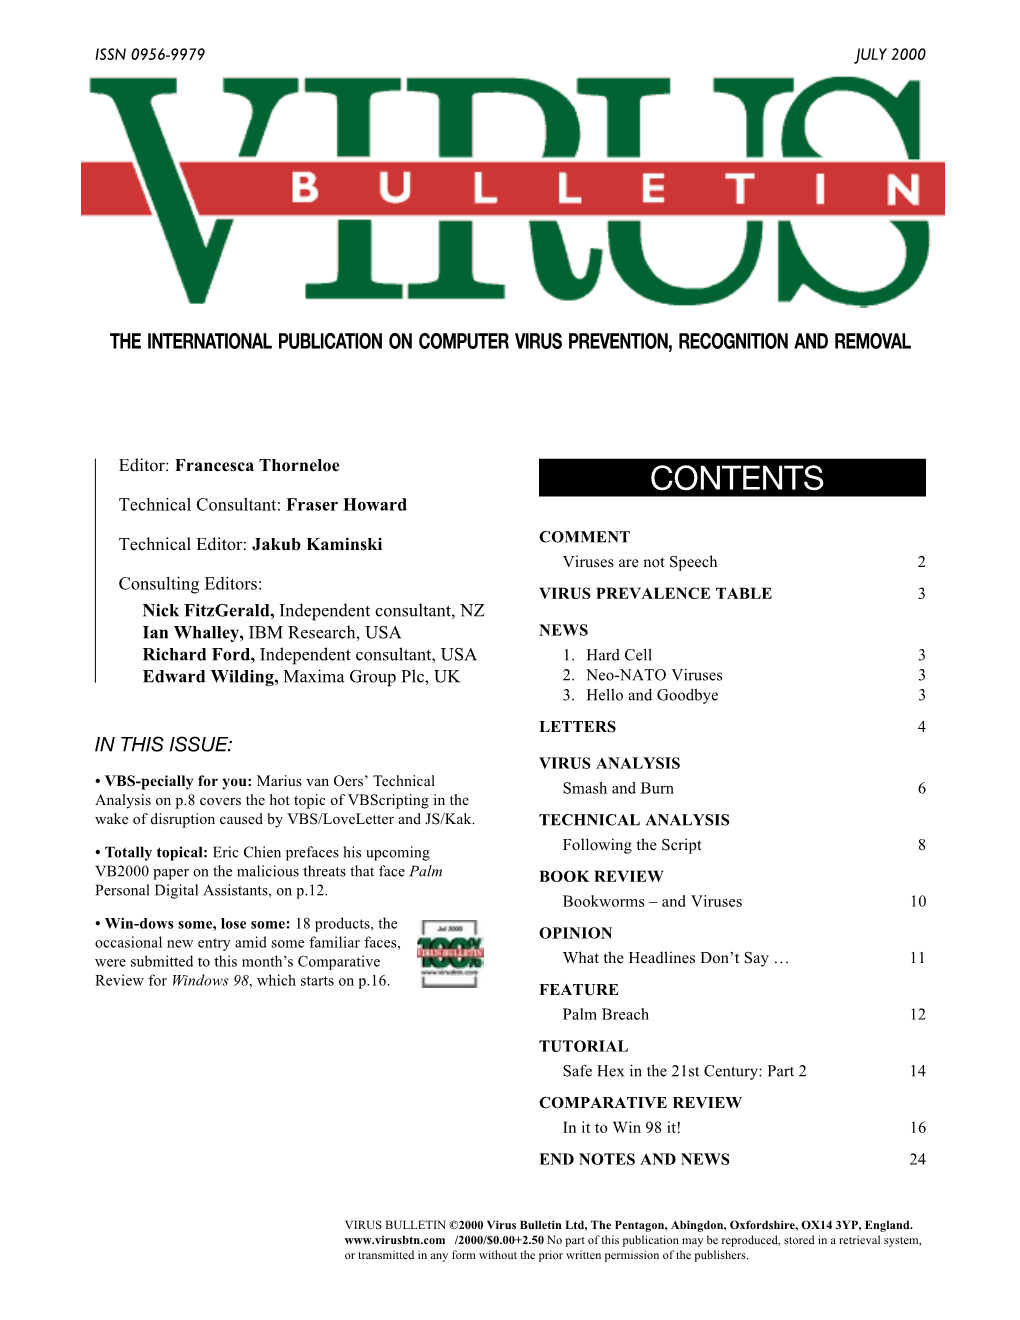 Virus Bulletin, July 2000